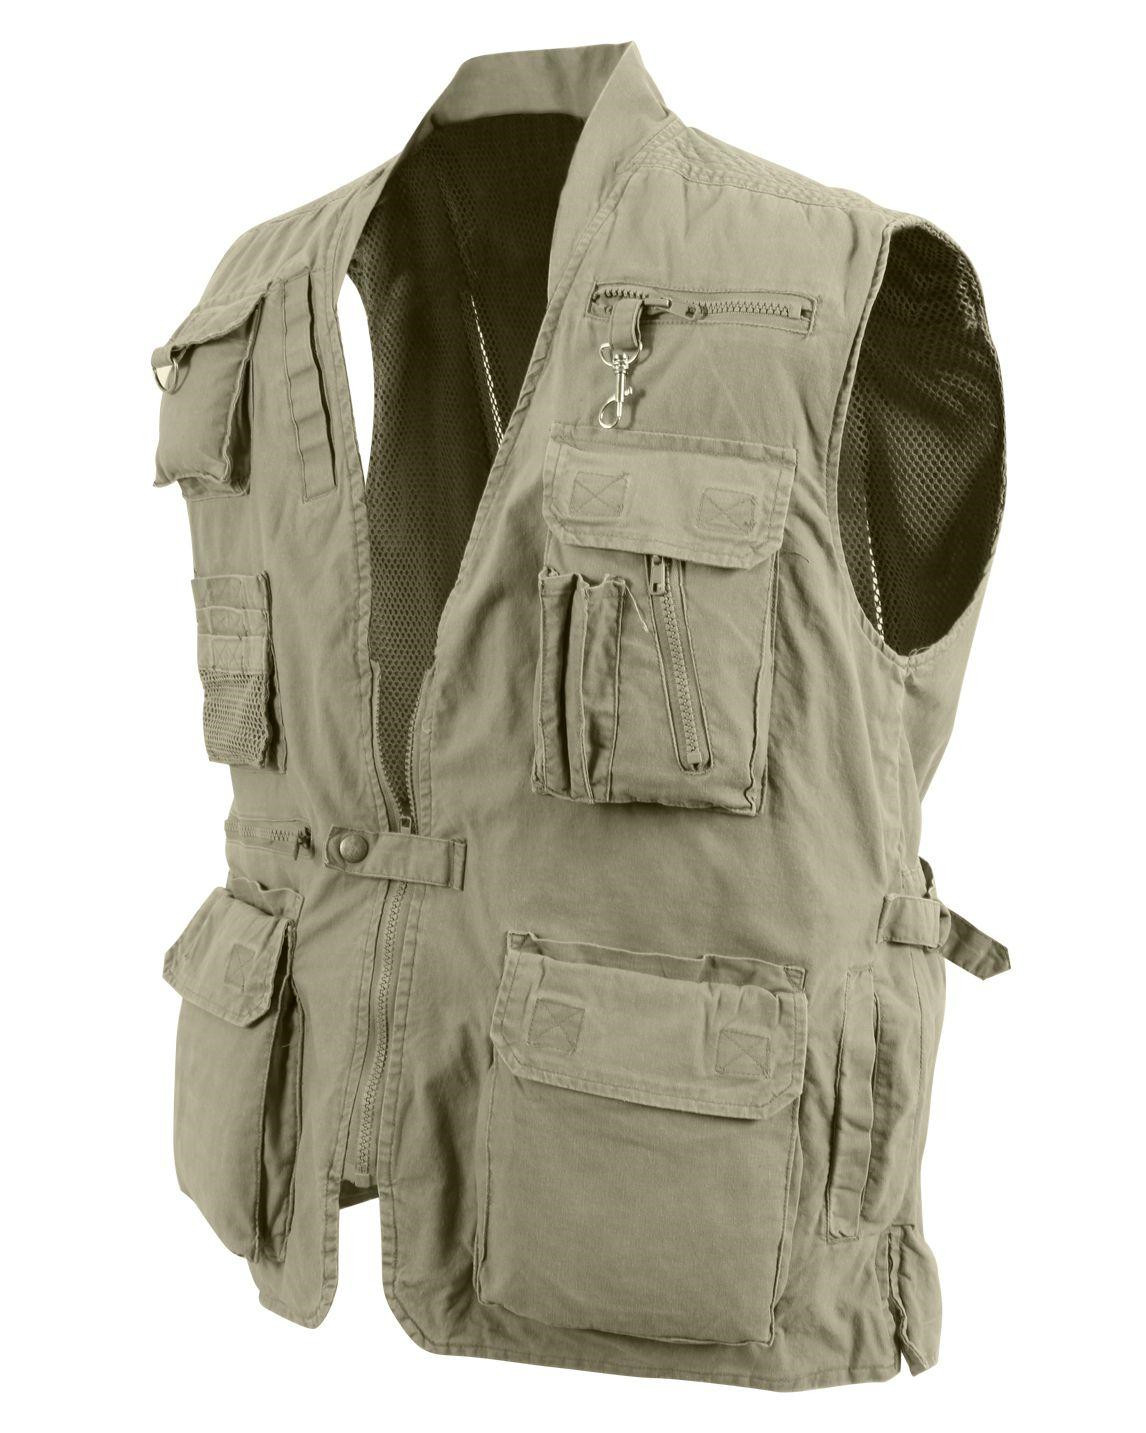 8: Rothco Deluxe Safari Vest (Khaki, M)